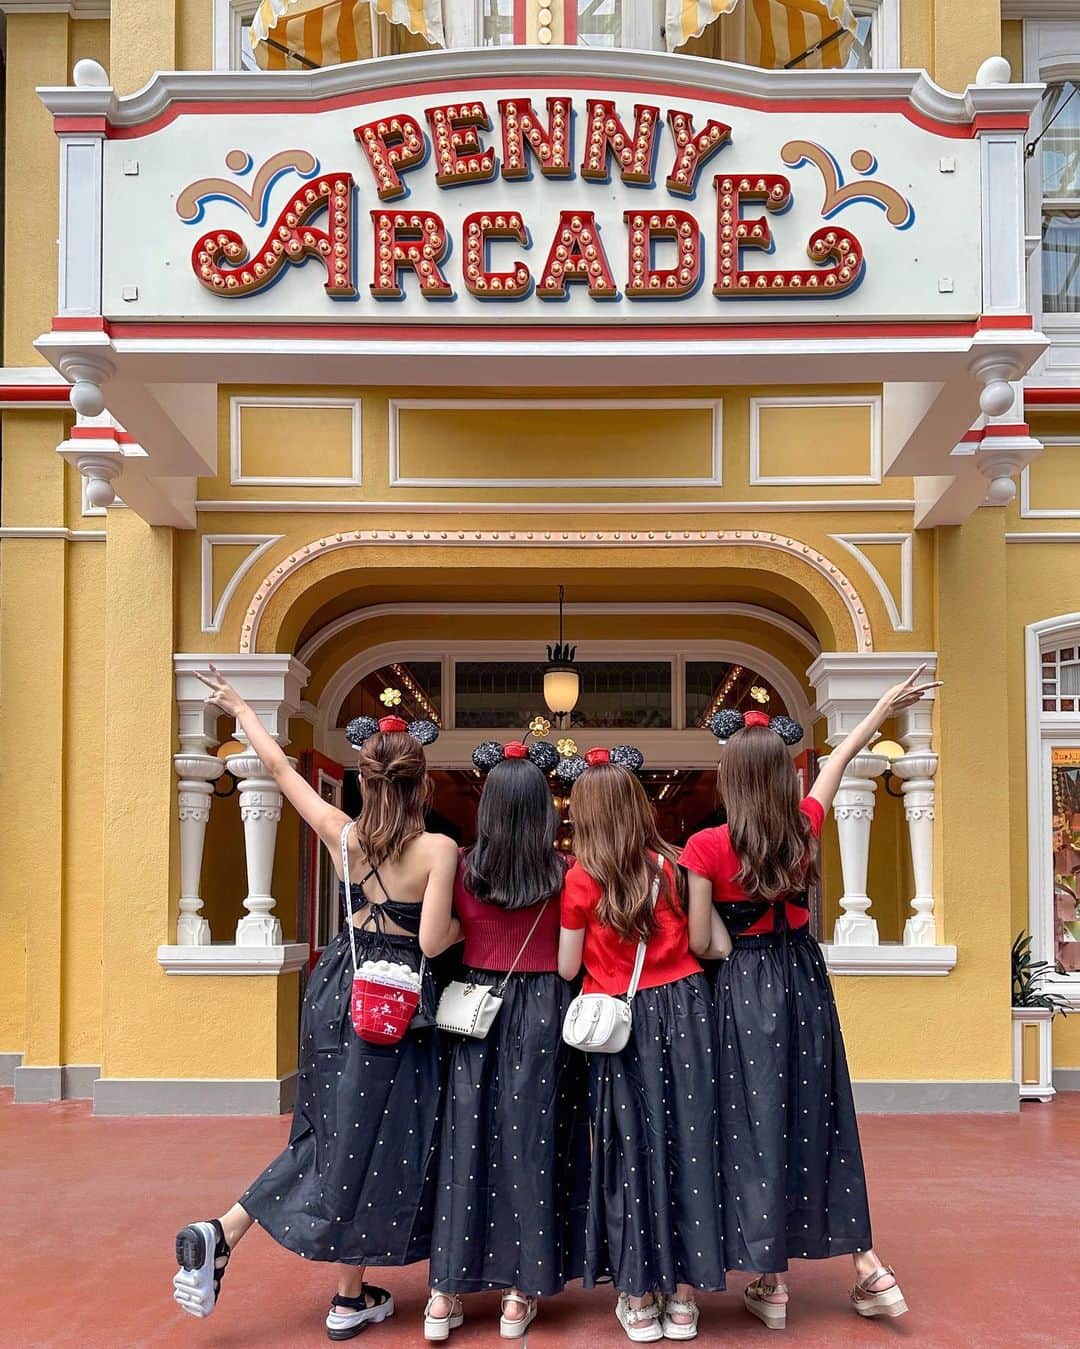 RIEのインスタグラム：「❤︎ 𝐃𝐢𝐬𝐧𝐞𝐲 𝐂𝐨𝐝𝐞 ❤︎ ⁡ オールドミニーちゃんコーデ🖤❤️🖤 ポップコーンバックも大活躍でした🍿𖤐 ⁡ ディズニーランドのワールドバザール内にある ペニーアーケードはお気に入りスポット🌼 クレーンゲームで景品獲得できたことはない🤞🏼 ⁡ ⁡ 過去のディズニー投稿は👇🏼 🏰 #rietabi_disney  ⁡ ⁡ I did an Old Minnie-chan outfit🖤The popcorn backpack I bought earlier came in handy🍿The photo spot is Penny Arcade inside Disneyland's World Bazaar. It's my recommended spot. ⁡ ⁡  ⁡ ⁡ ⁡ #ディズニーランド #ディズニーコーデ #4人でディズニー #オールドミニー #スパンコールカチューシャ #ディズニーフォト #ディズニーフォトスポット #大人数ディズニー #おそろいディズニー #ワールドバザール #tokyodisneyland #disneystyle #shein購入品」